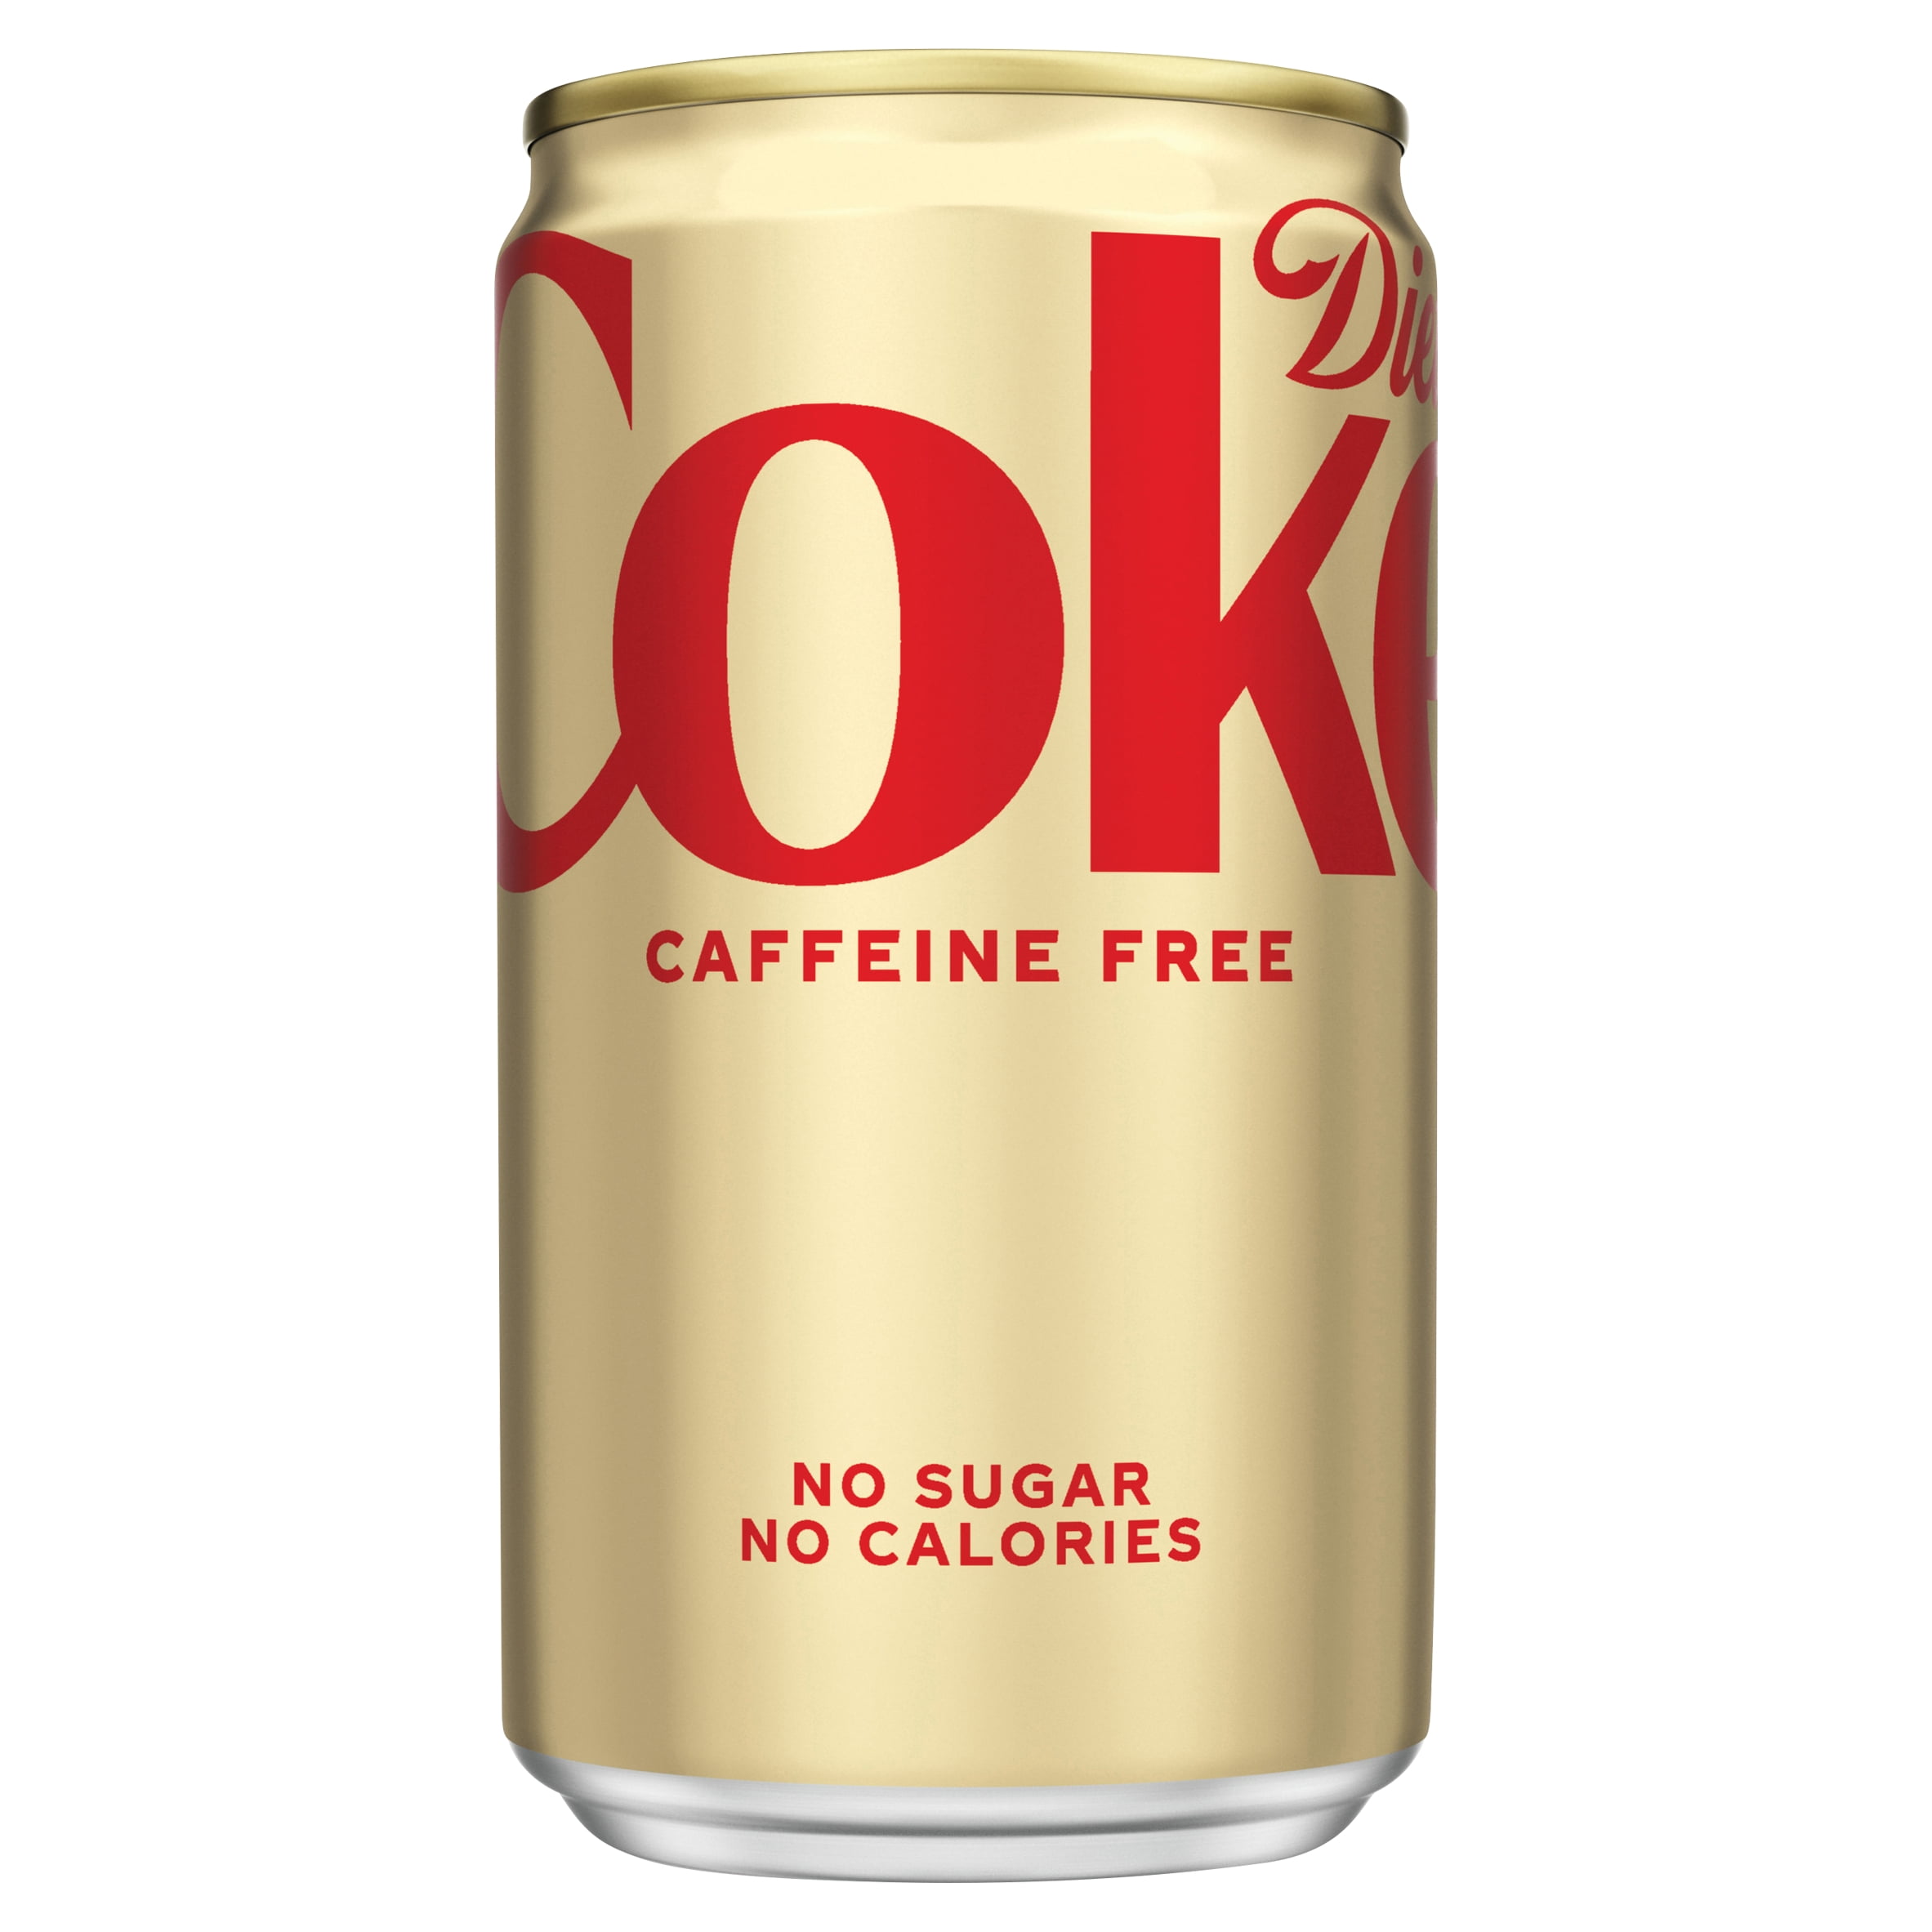 large diet coke caffeine